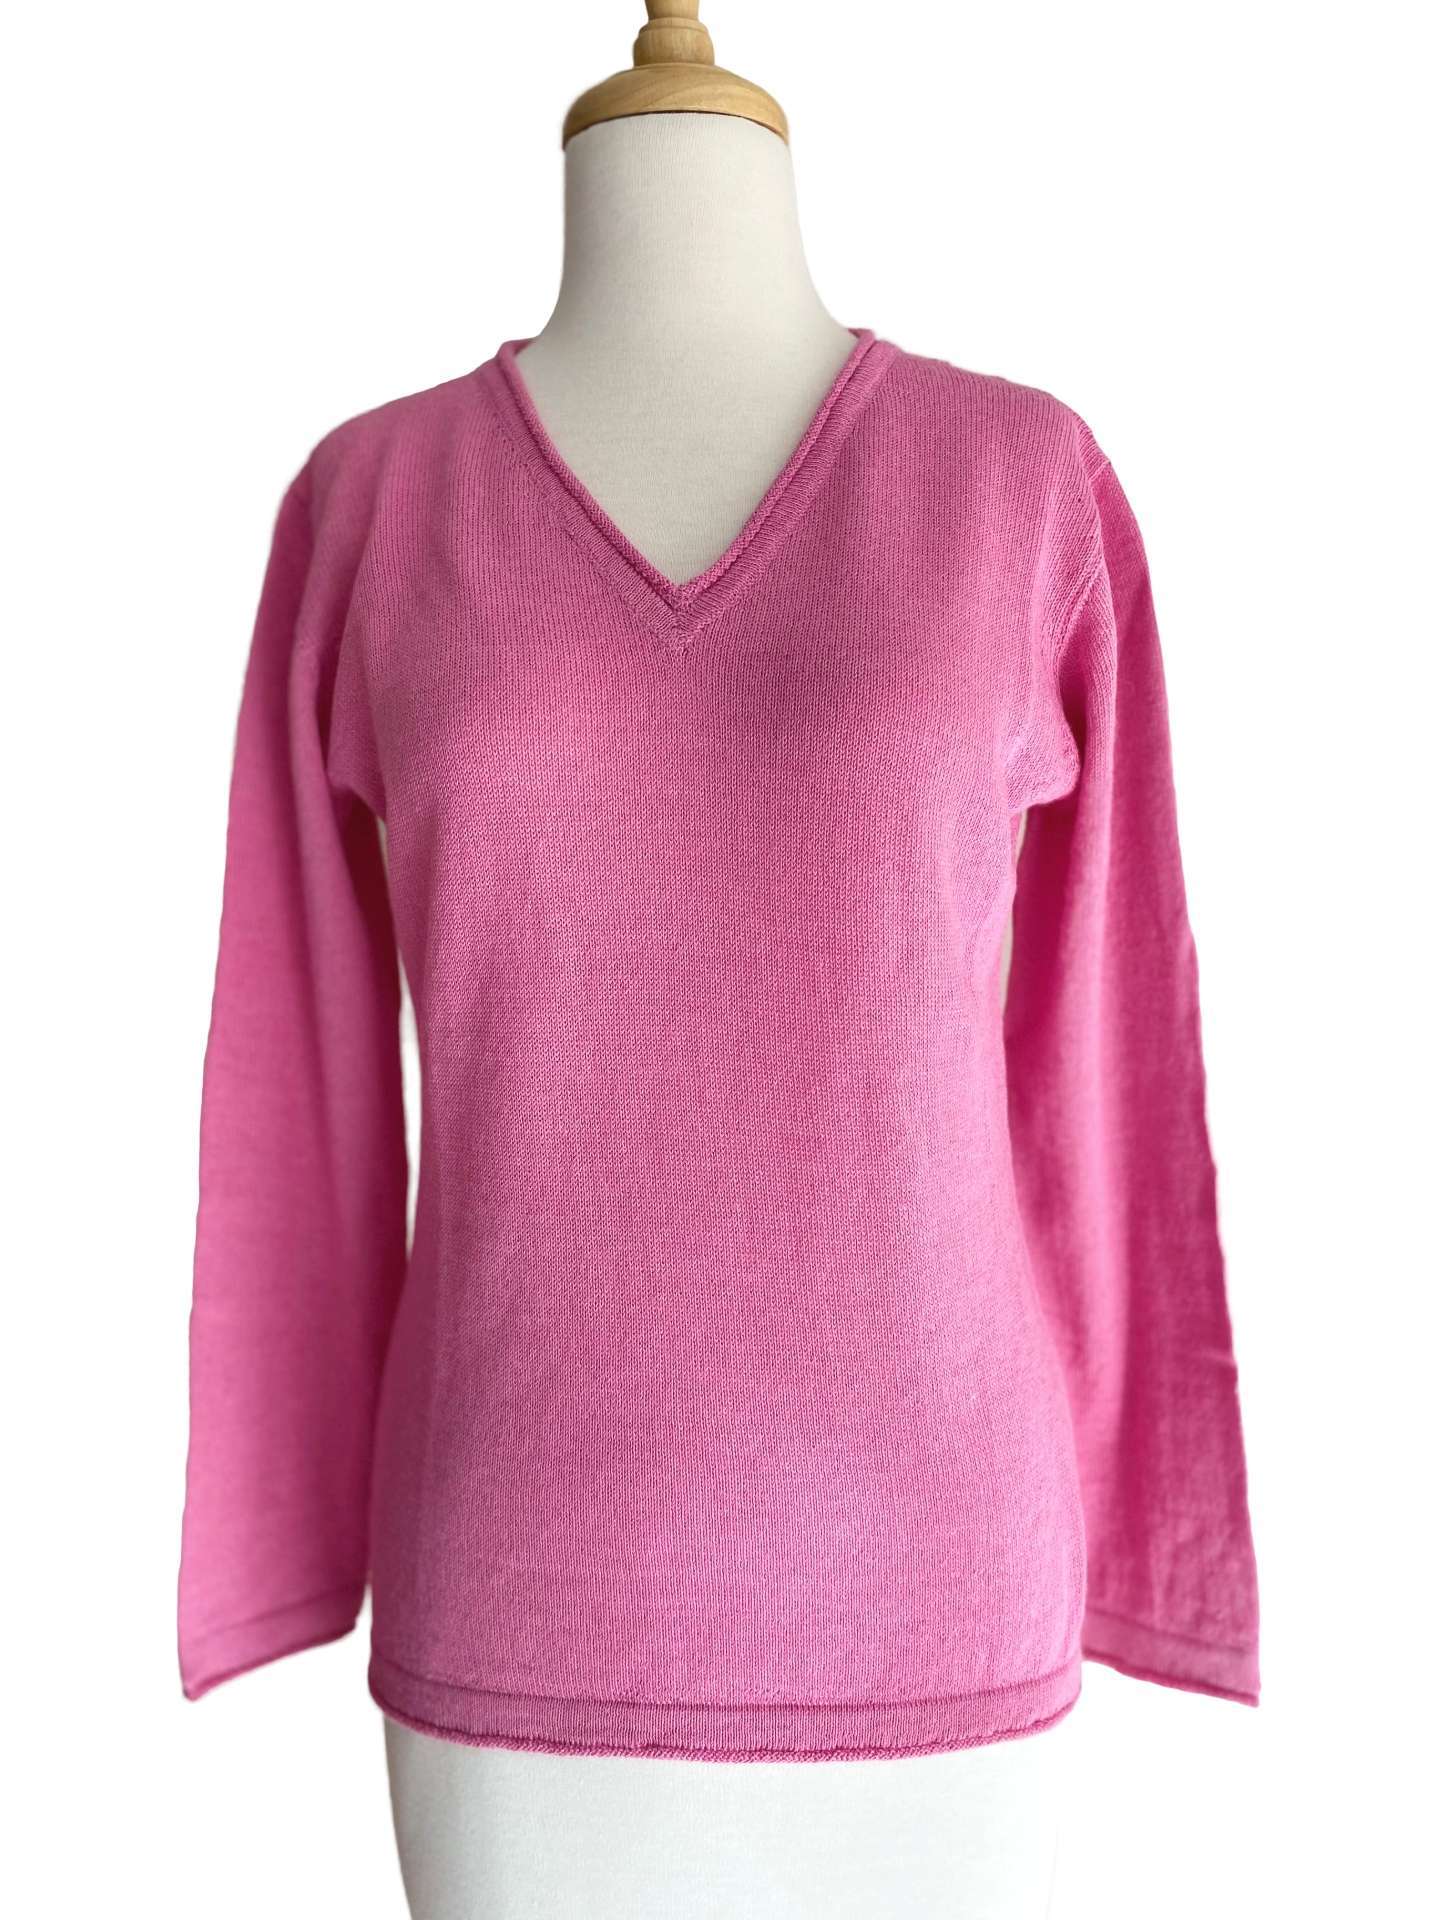 Briella Sweater Candy Pink - 1